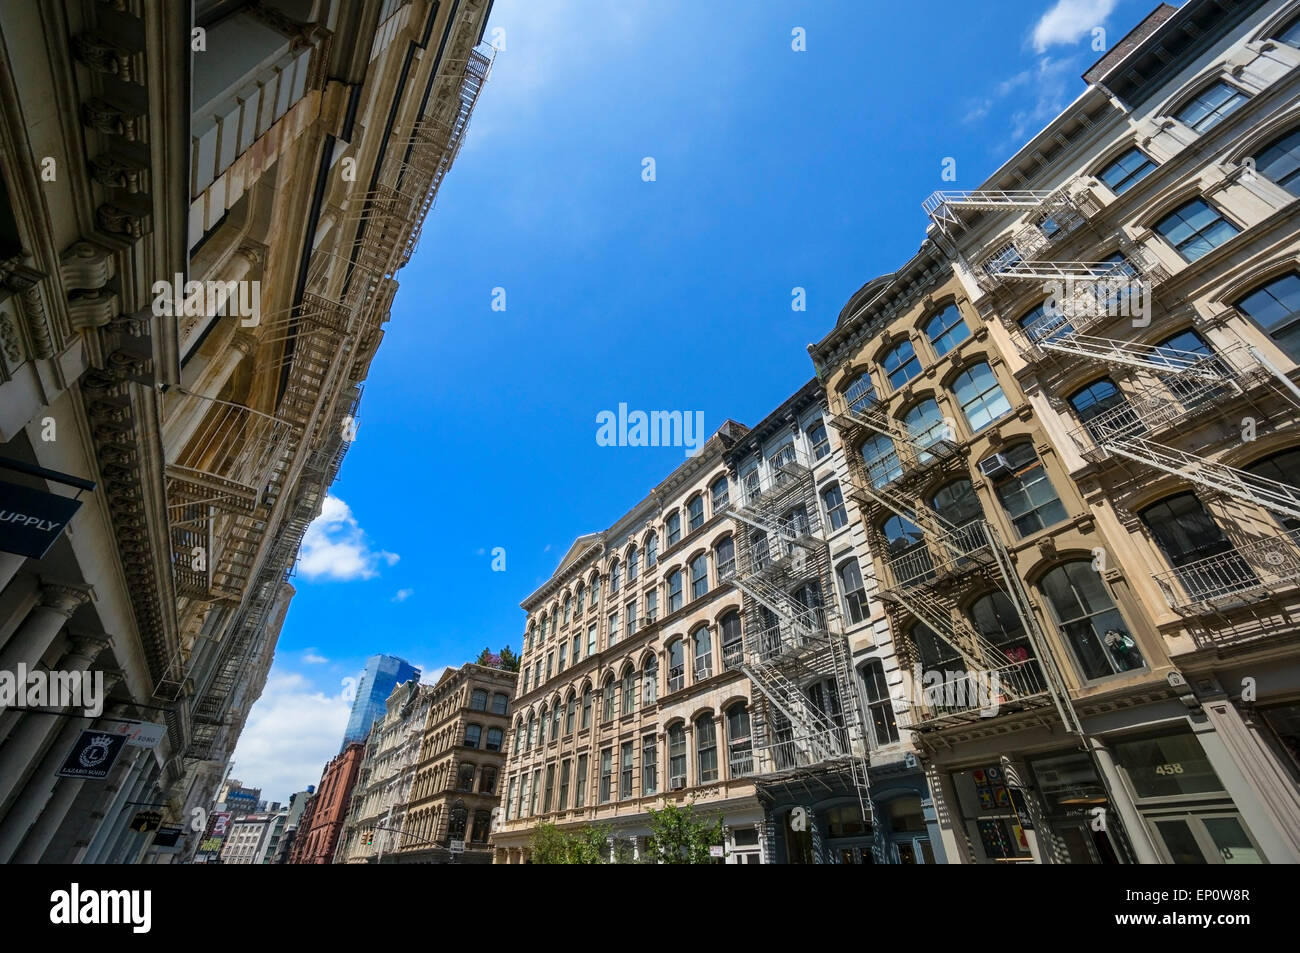 view-of-buildings-on-broom-street-in-the